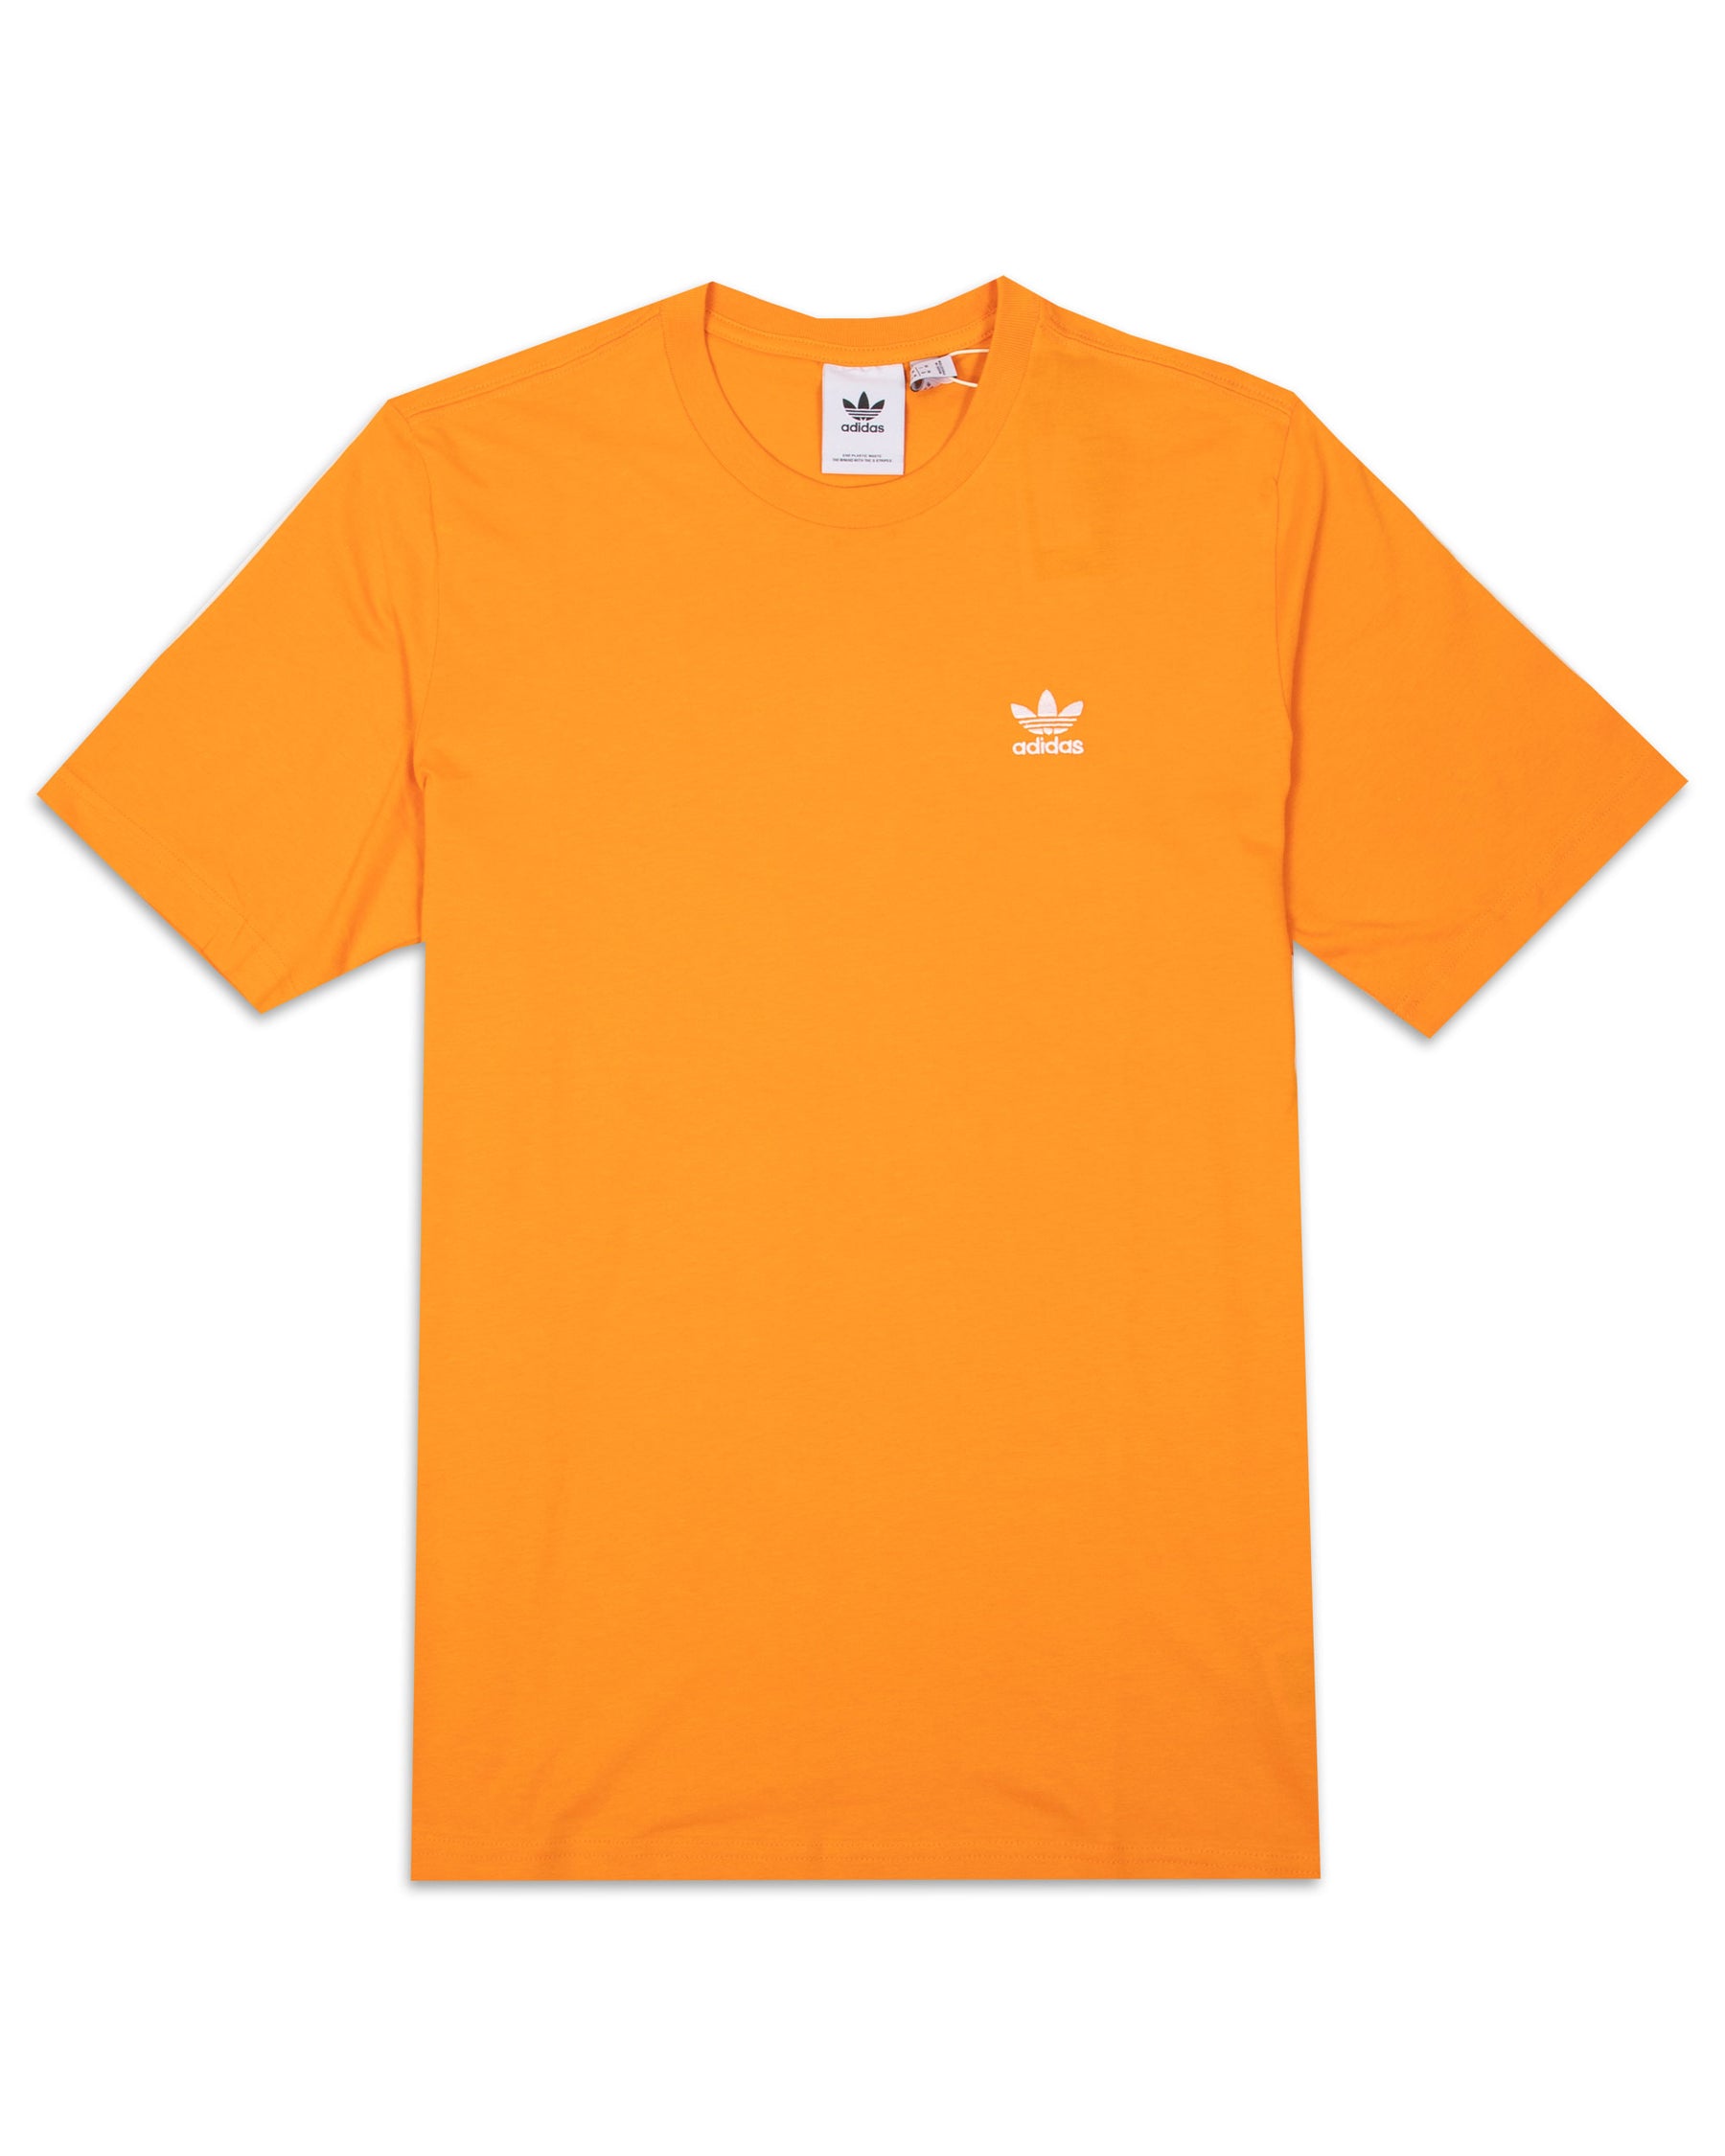 T-Shirt Uomo Adidas Essential Arancione